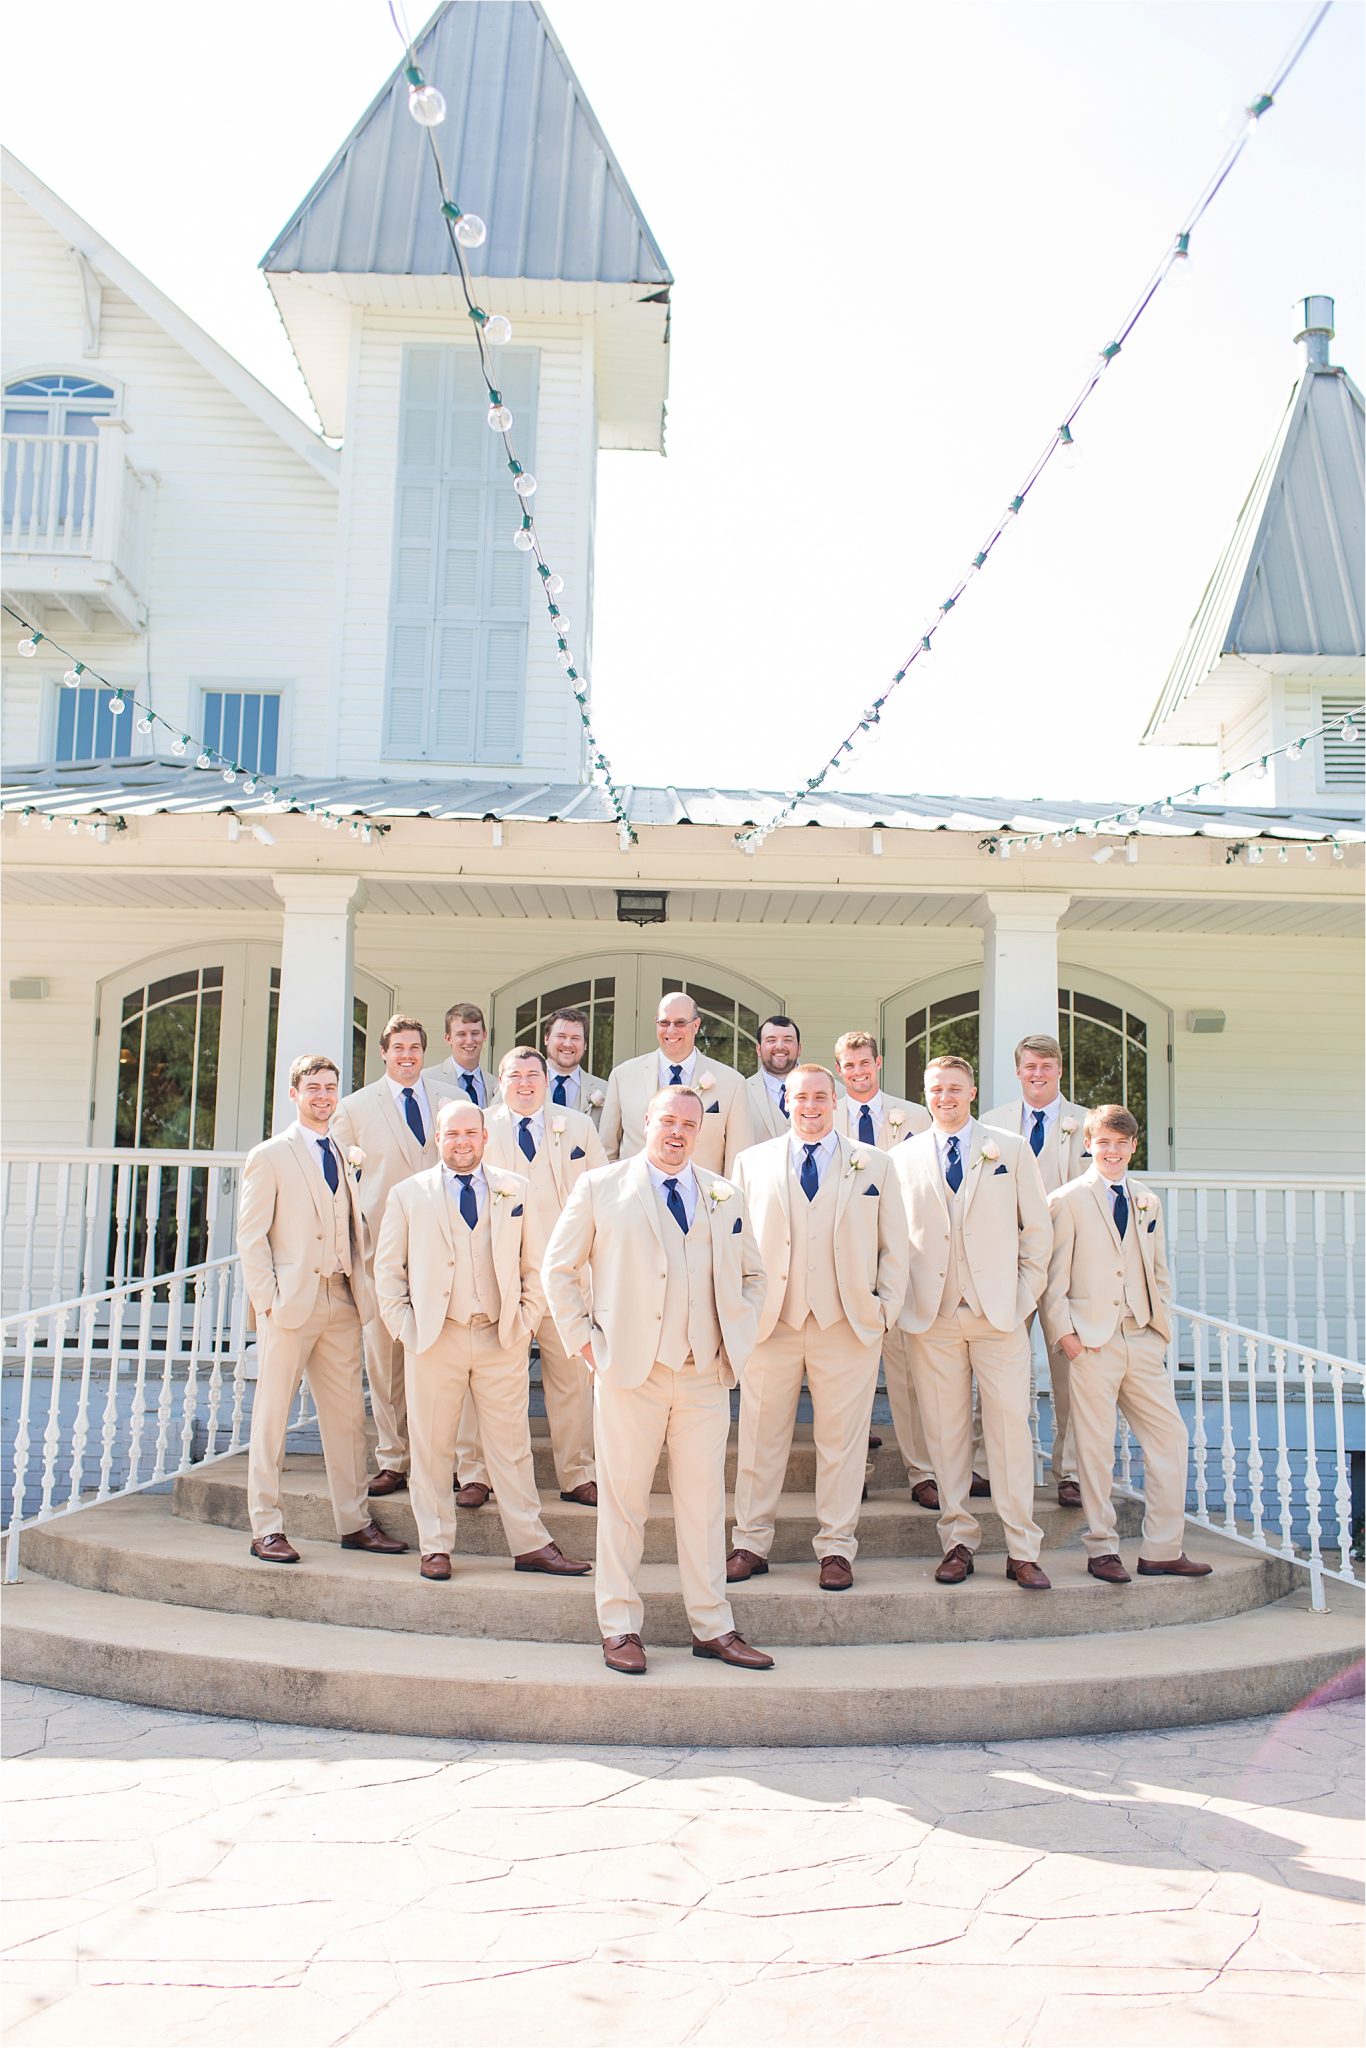 Sonnet House, Birmingham Alabama Wedding Photographer, Grooms and groomsmen 